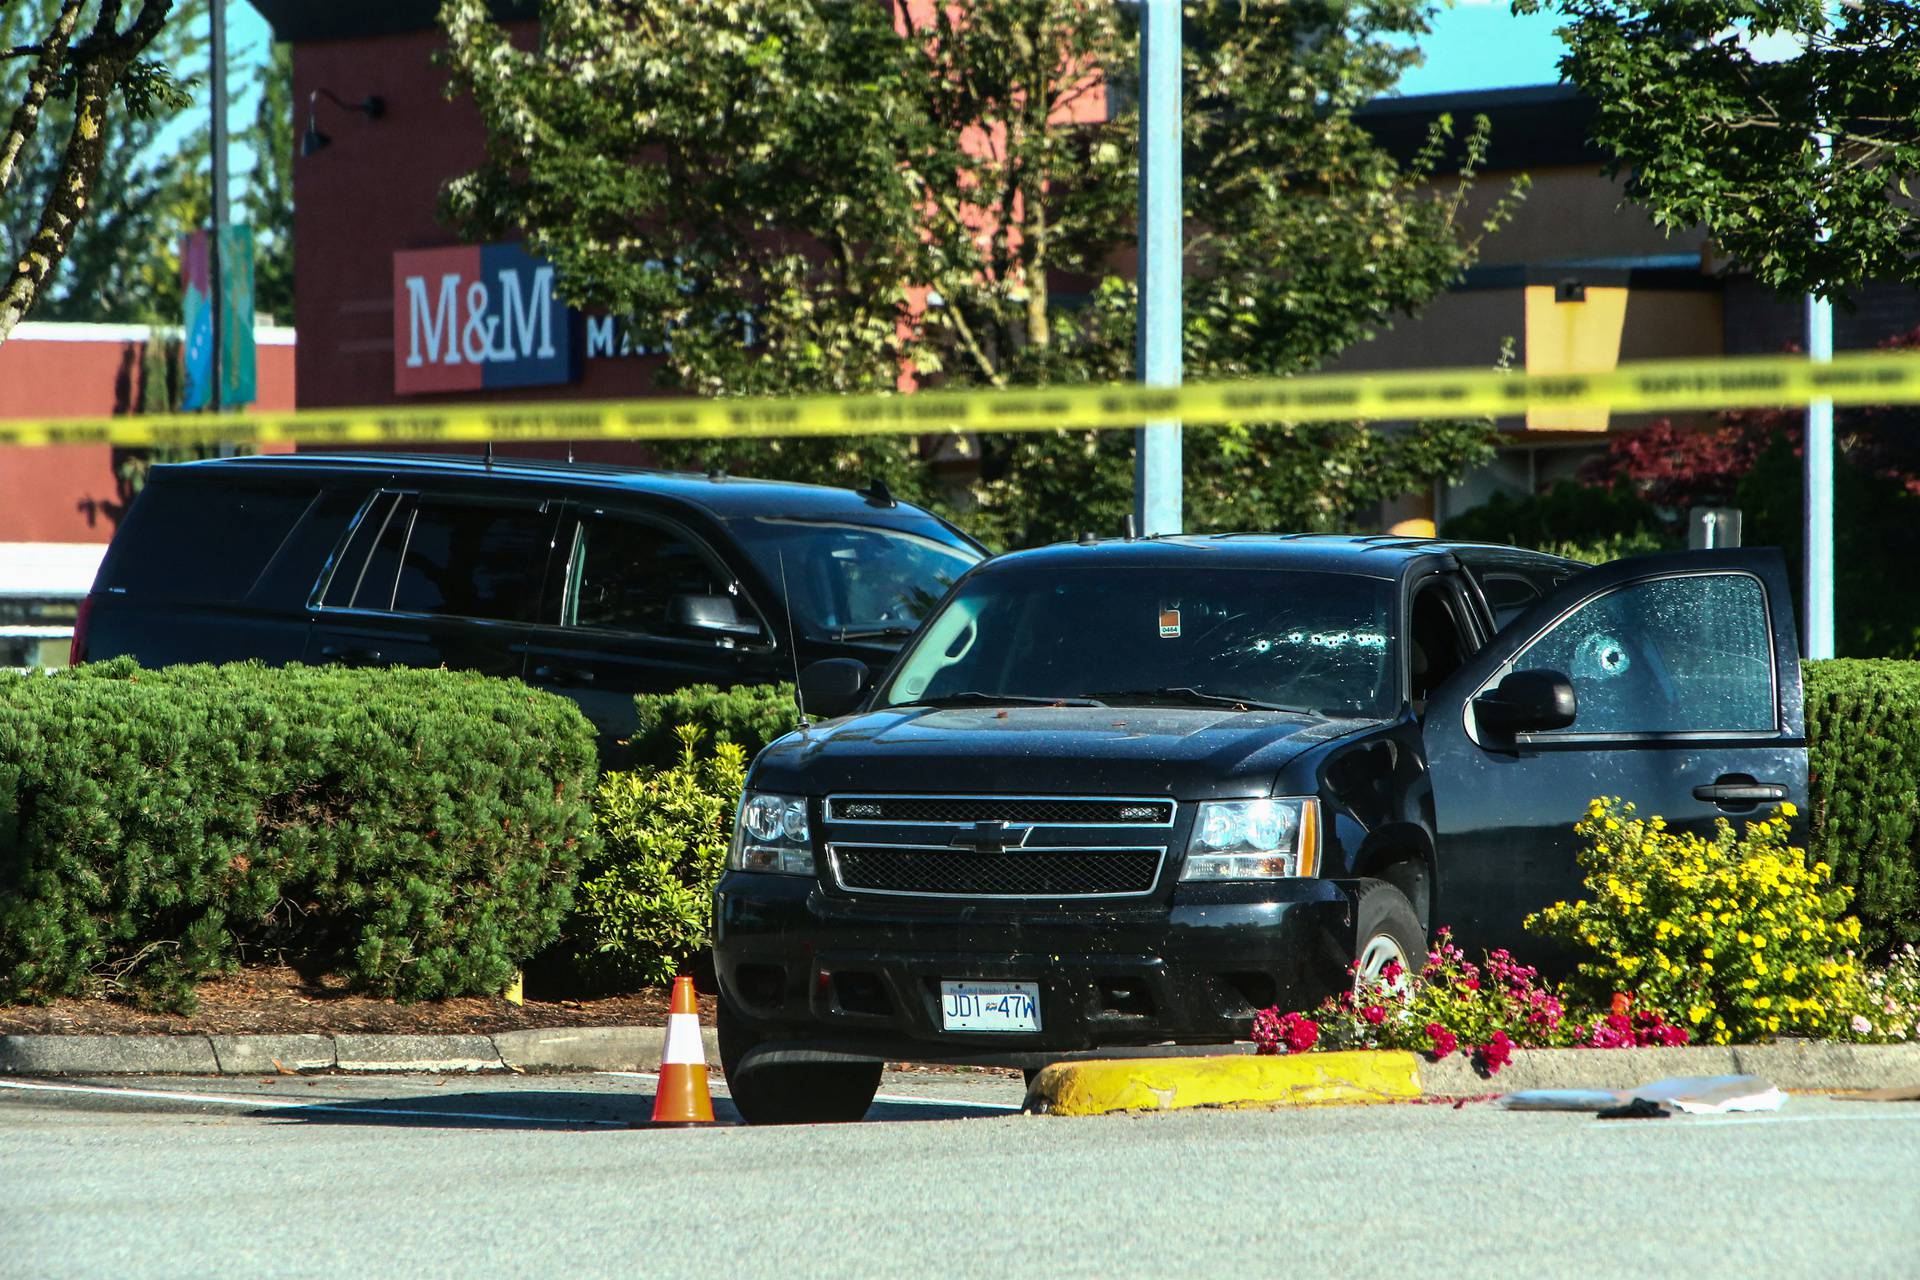 Authorities alerted residents of multiple shootings in Langley